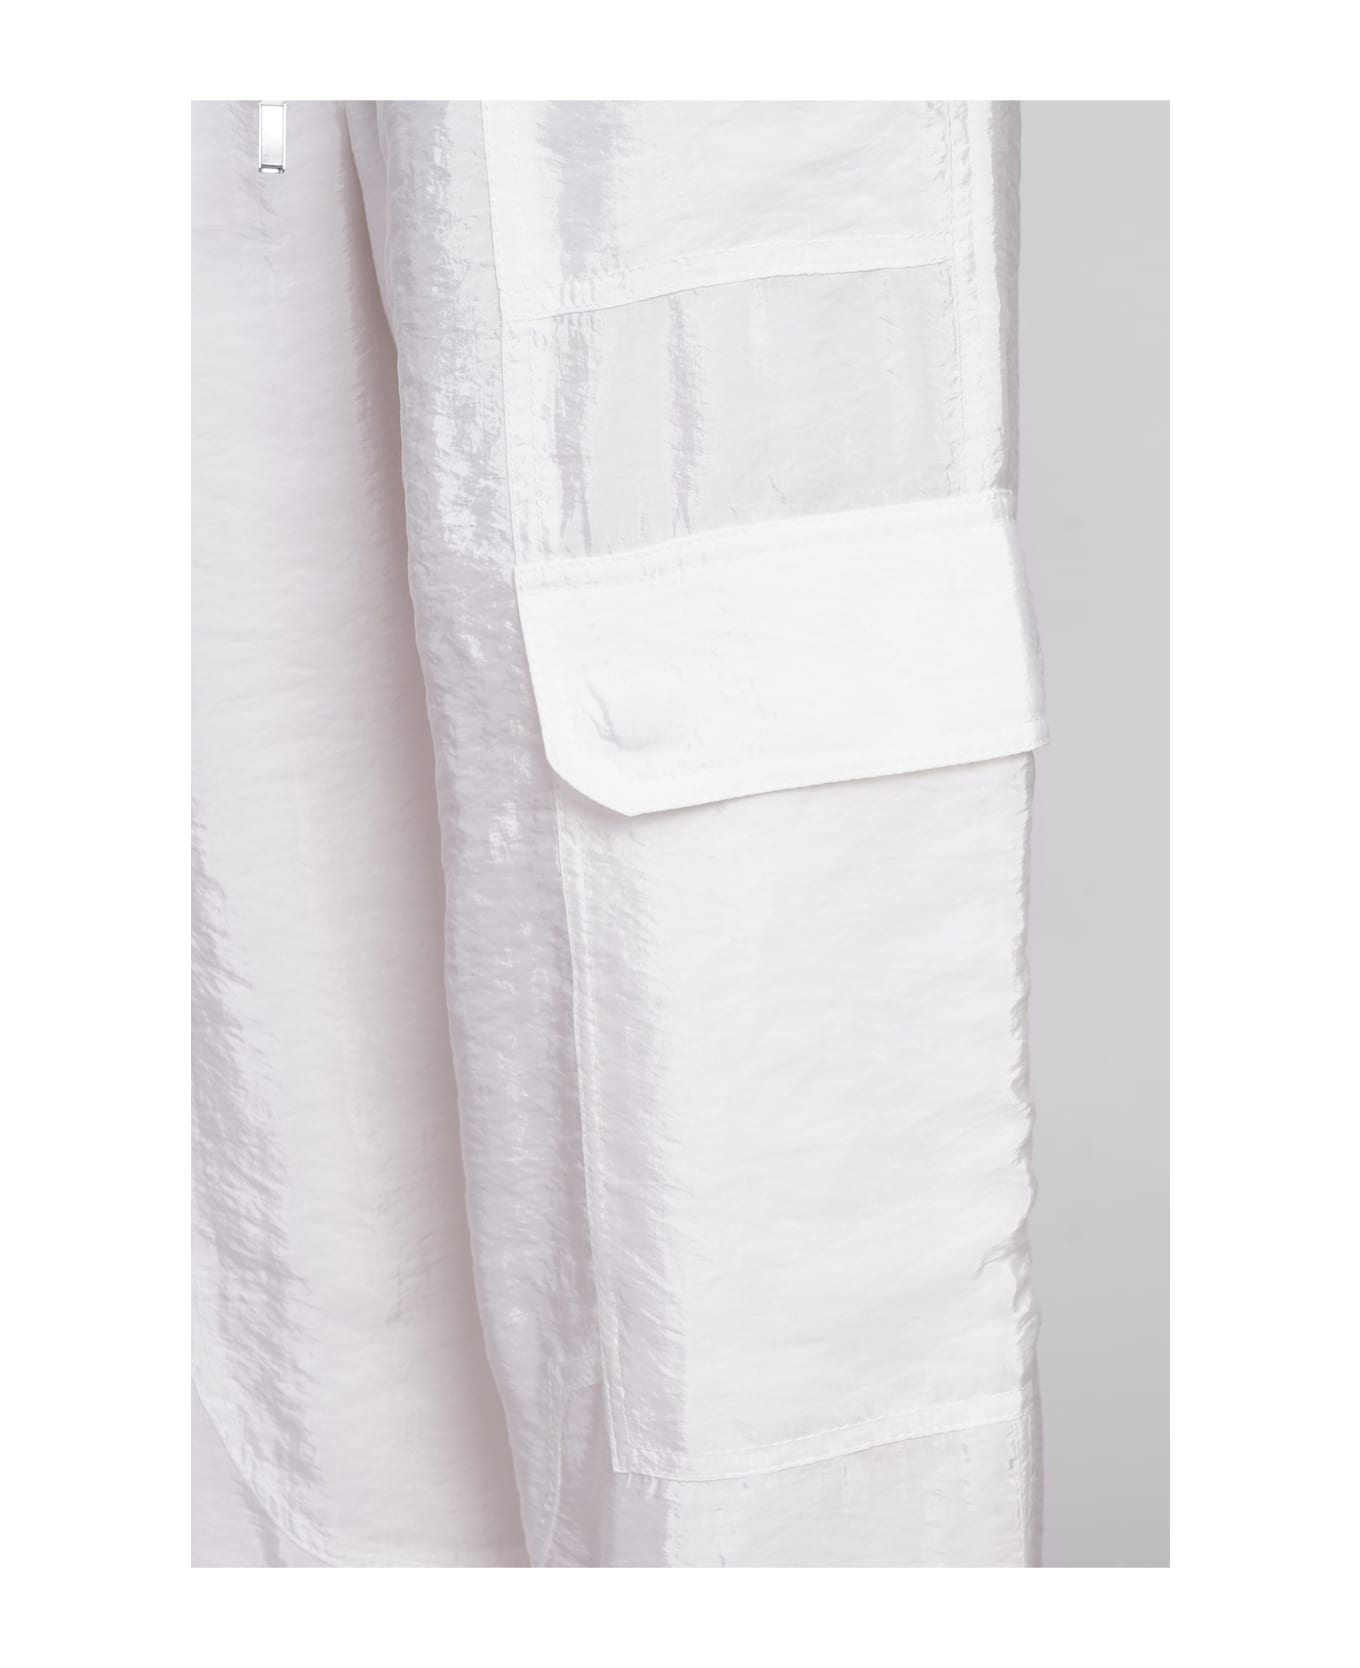 Simkhai Aurora Pants In White Rayon - white